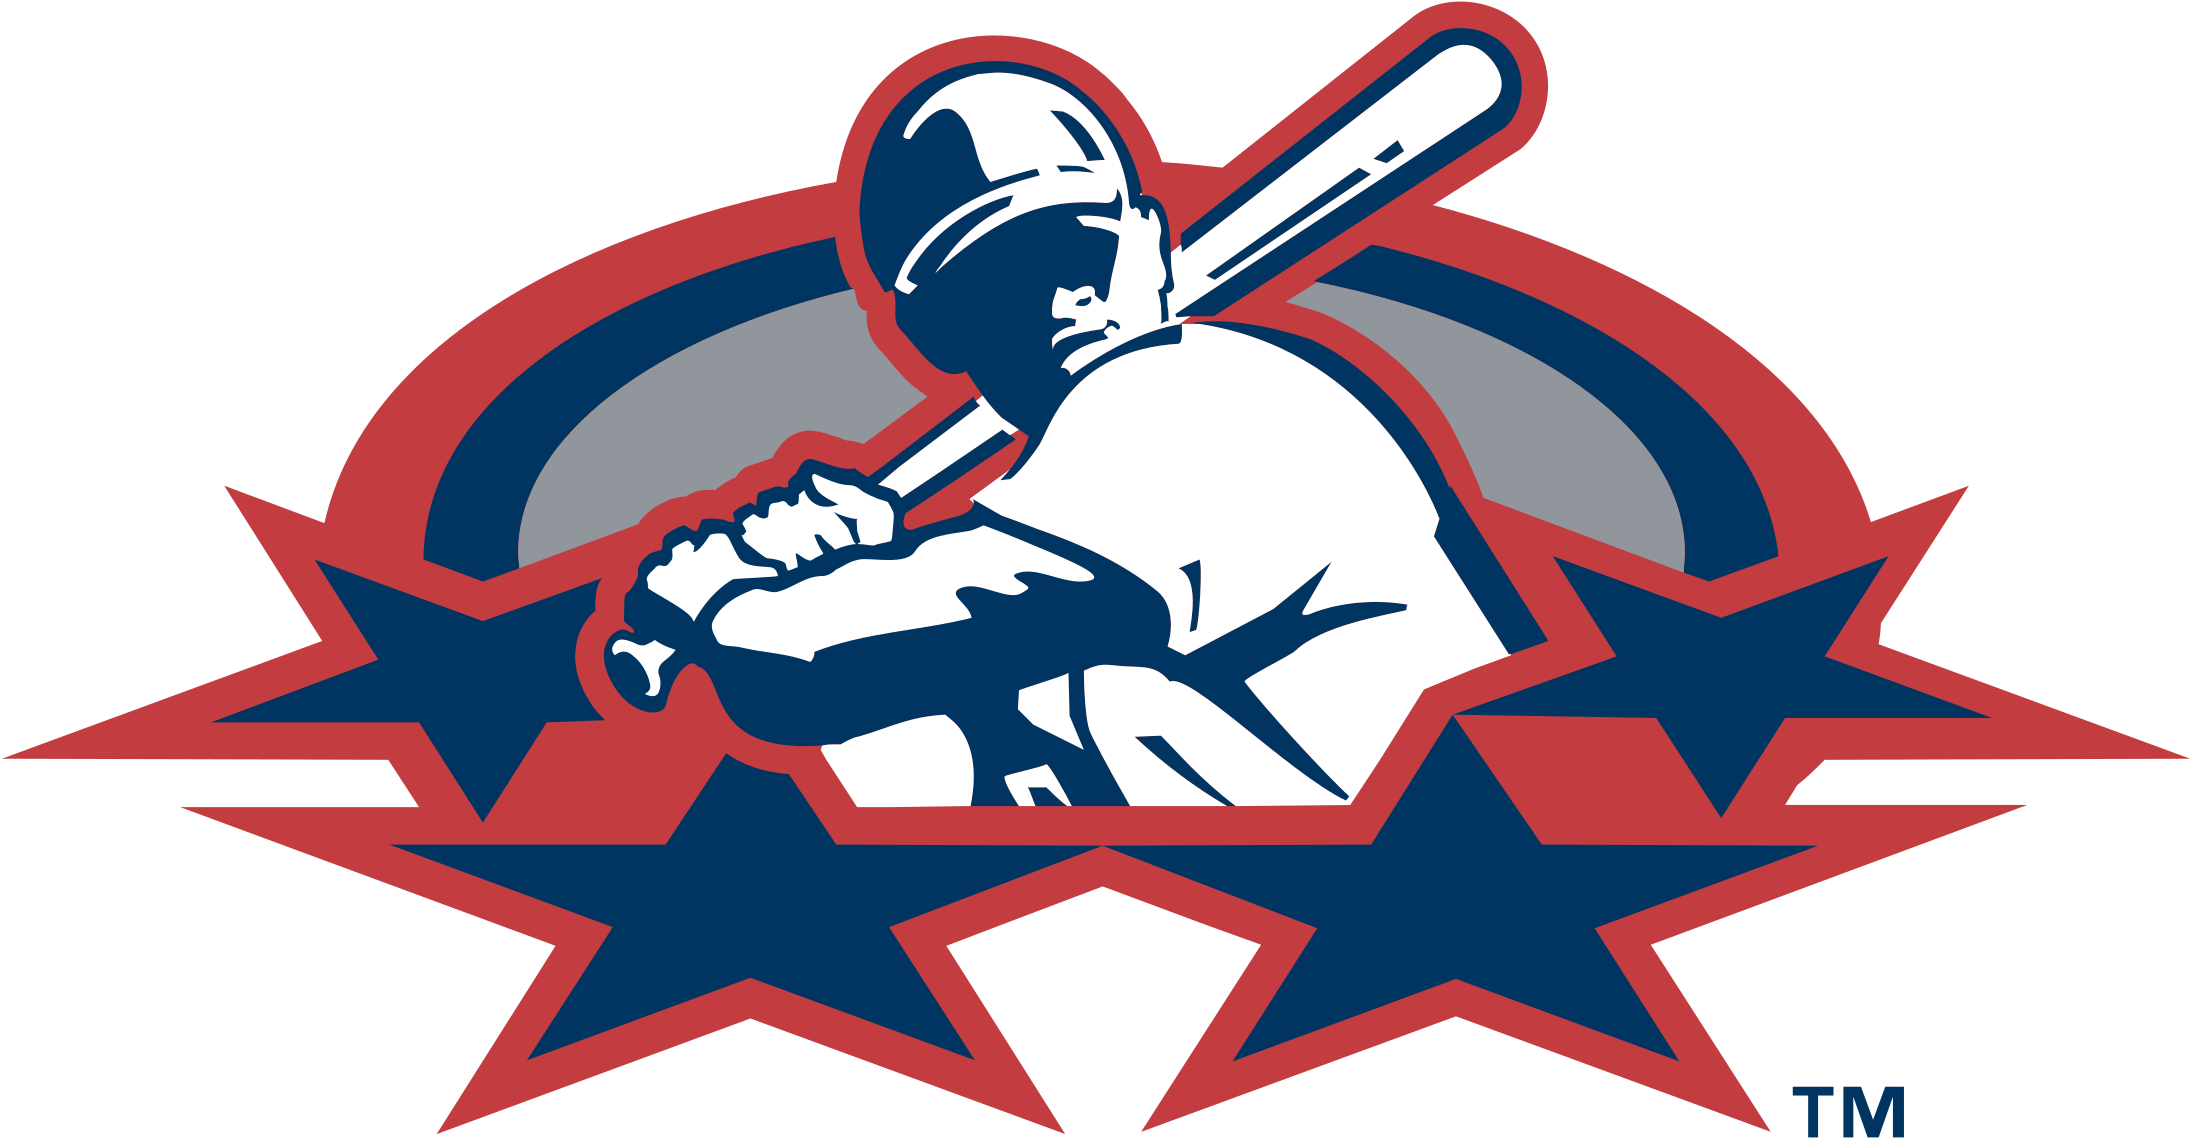 Minor League Baseball Logo Png Transparent Svg Vector - Major League ...